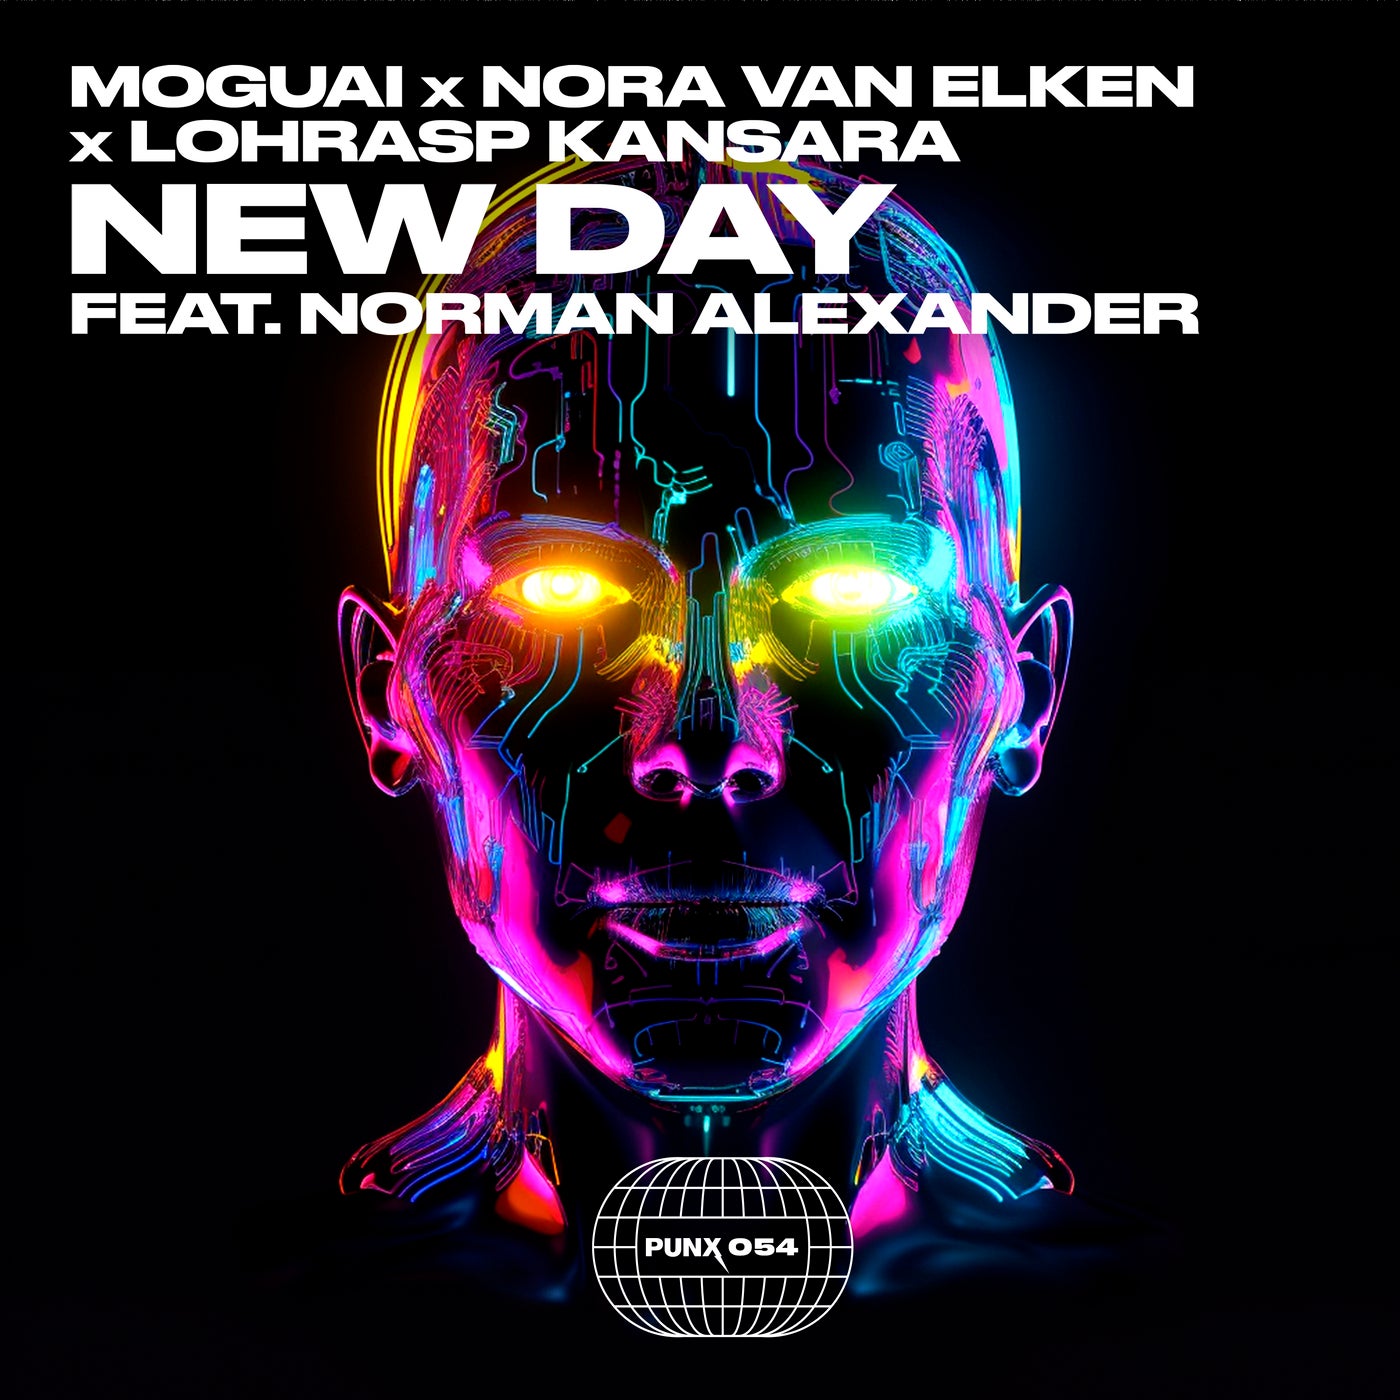 Mogual x Nora Van Ellen x Norman Alexander - New Day feat. Lohrasp Kansara (Bright Lights Extended Remix)